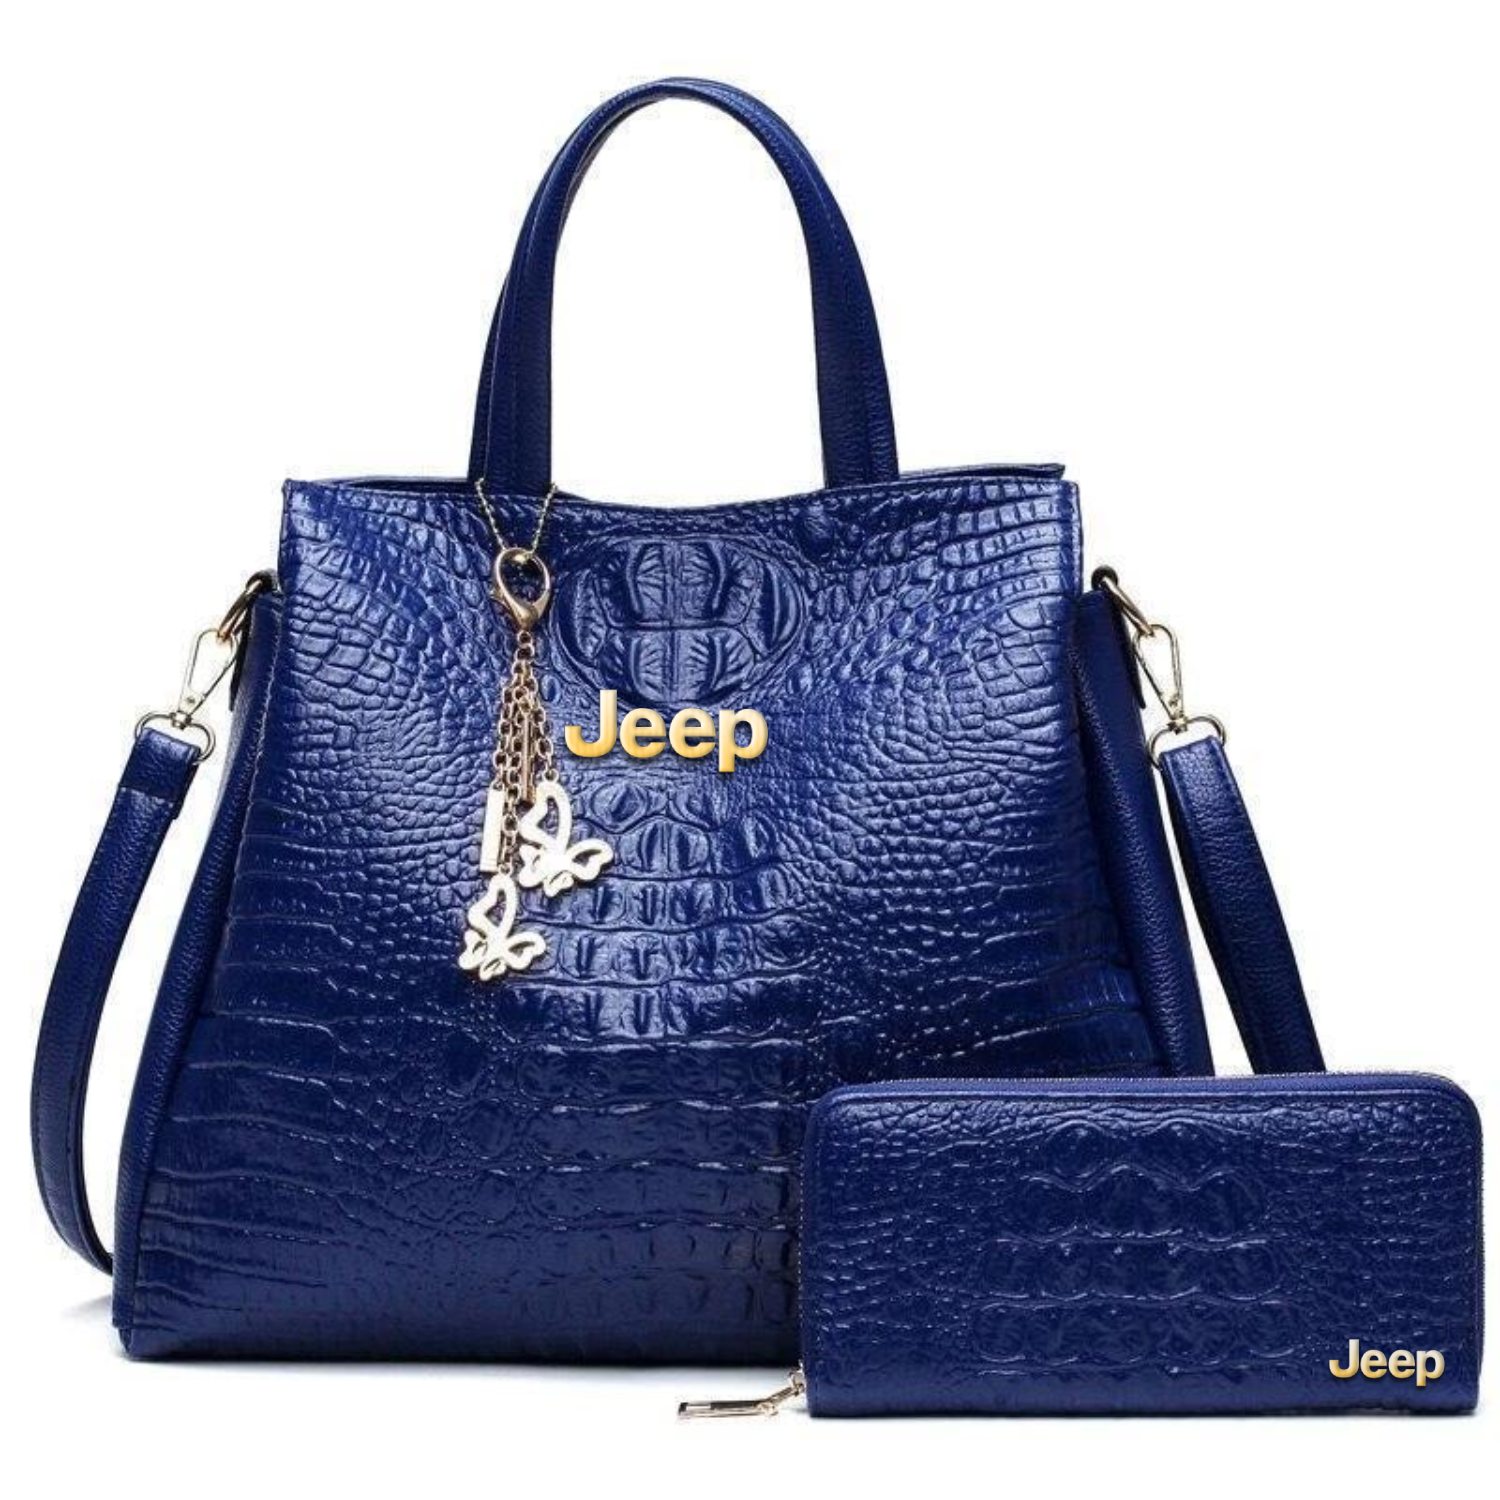 Jeep Luxury Handbags With Free Matching Wallets - Tana Elegant